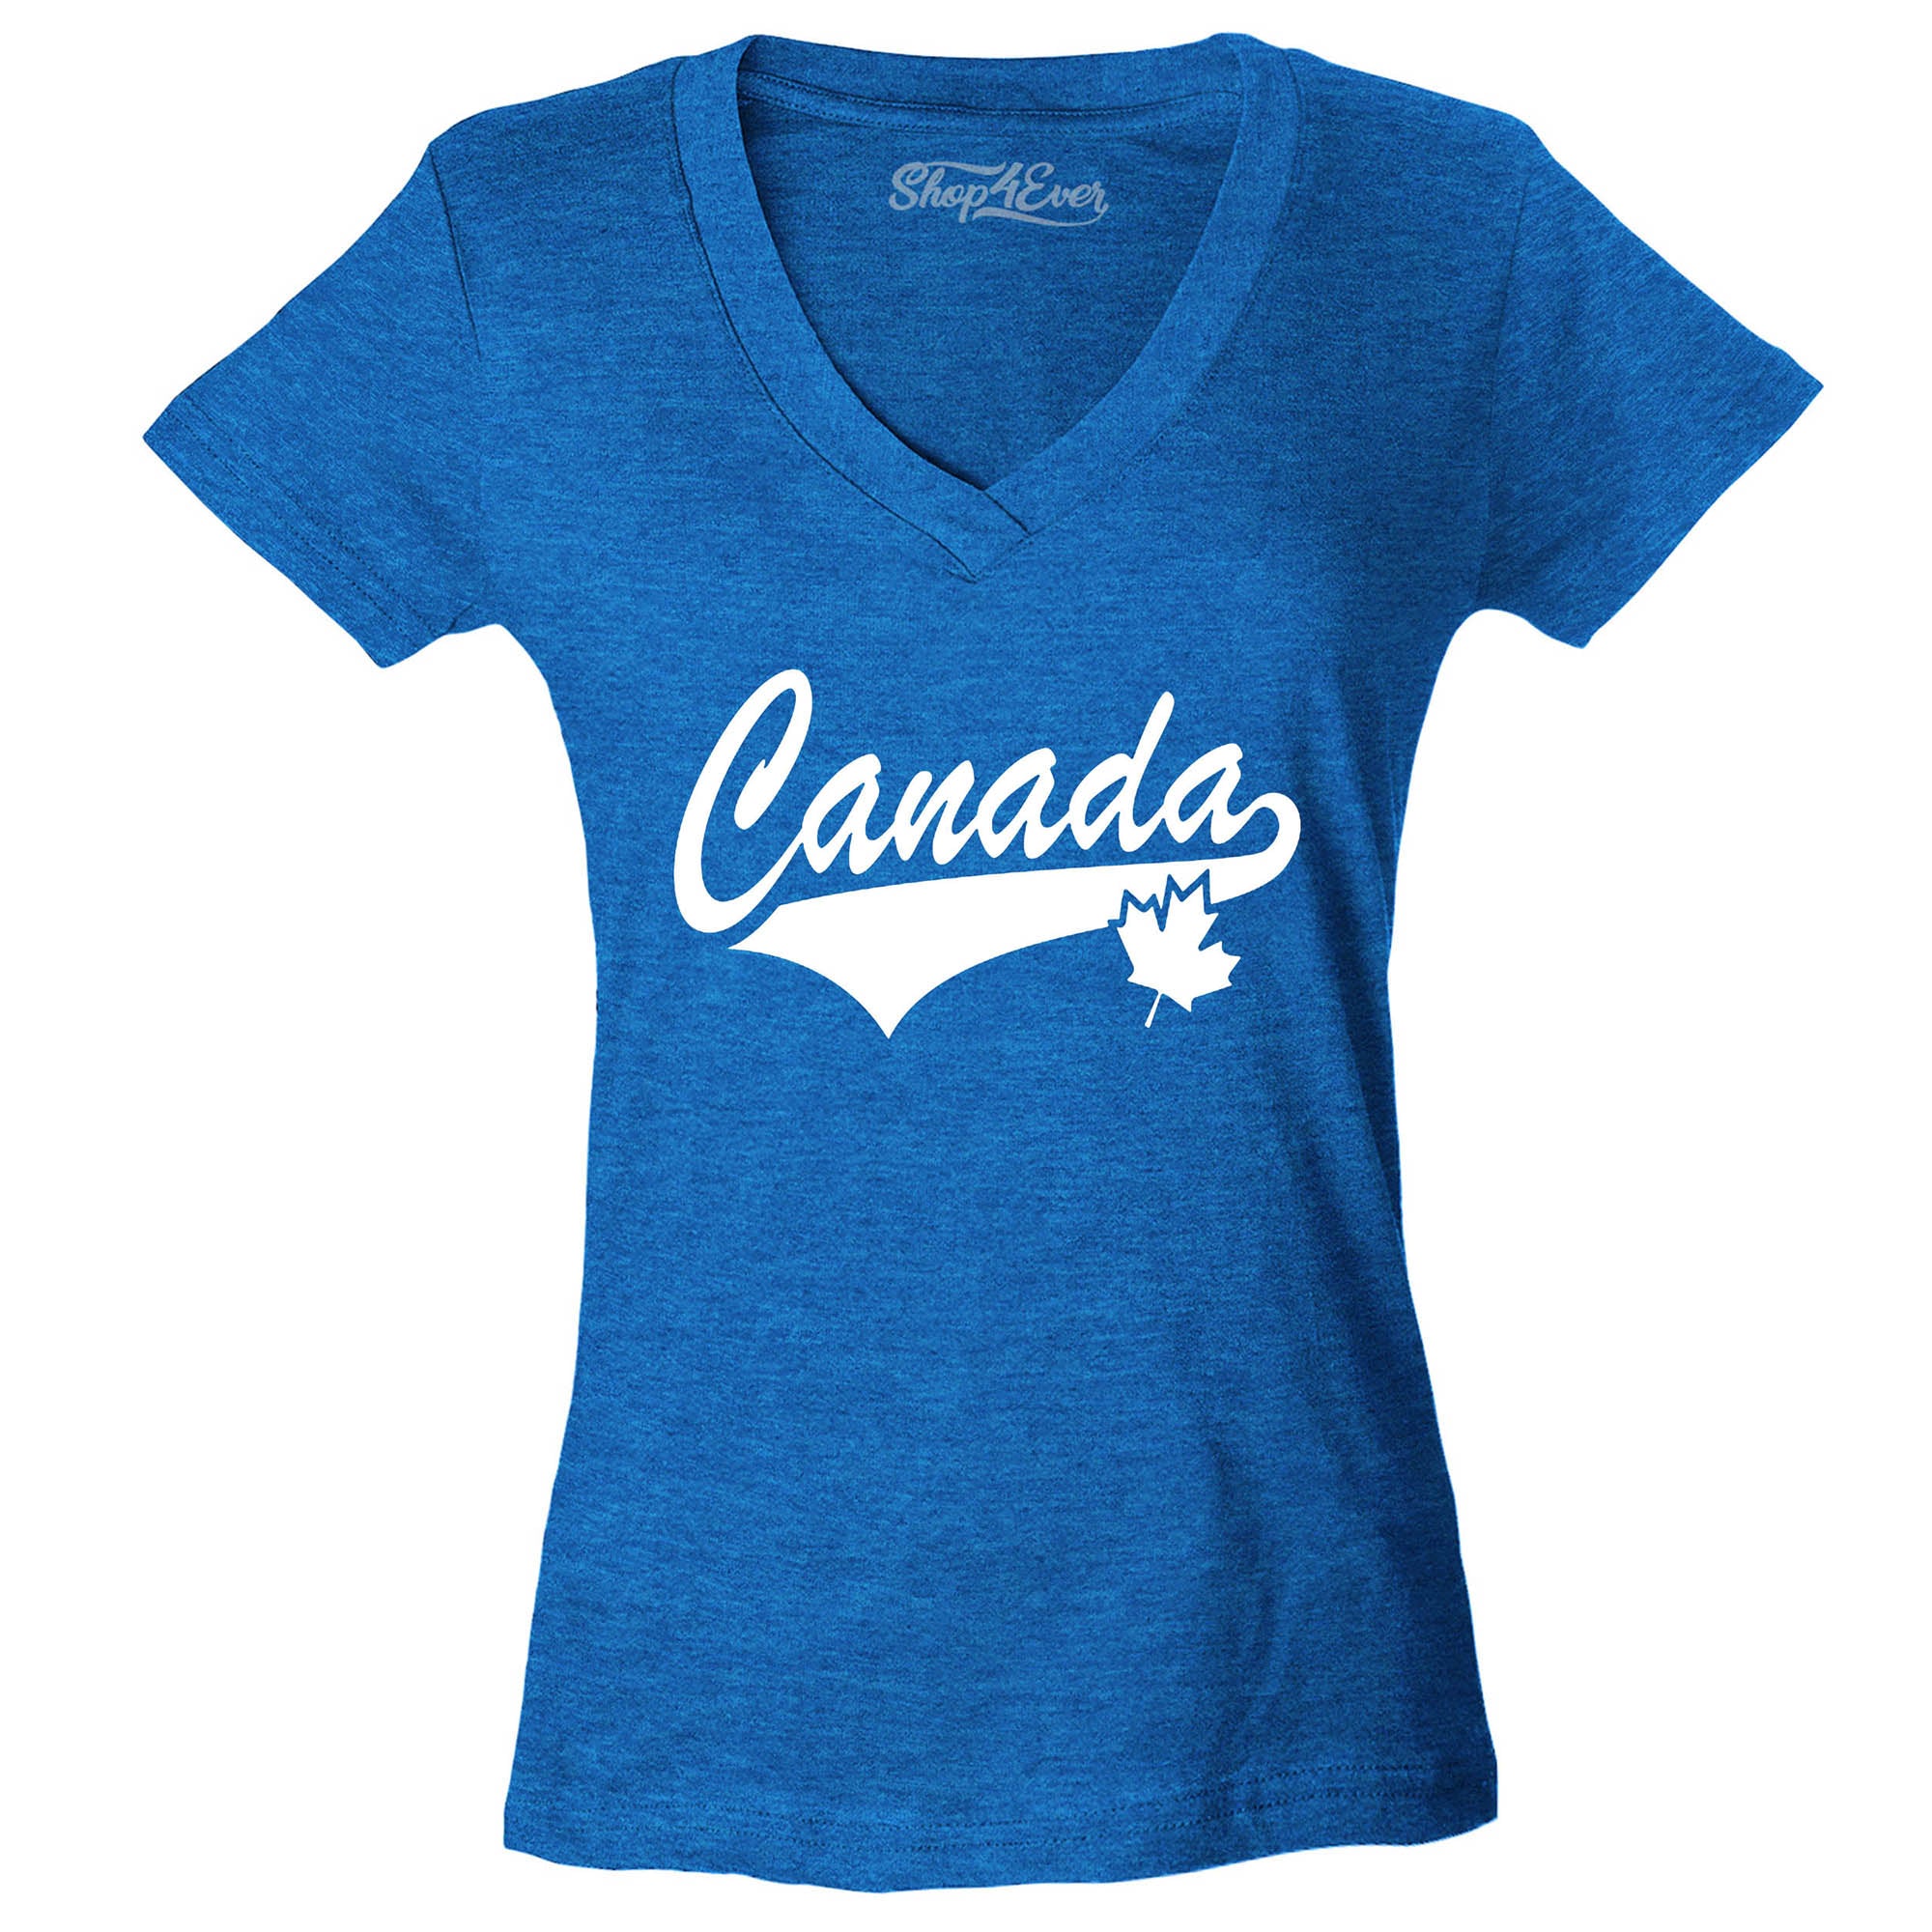 Canada White Women's V-Neck T-Shirt Slim FIT